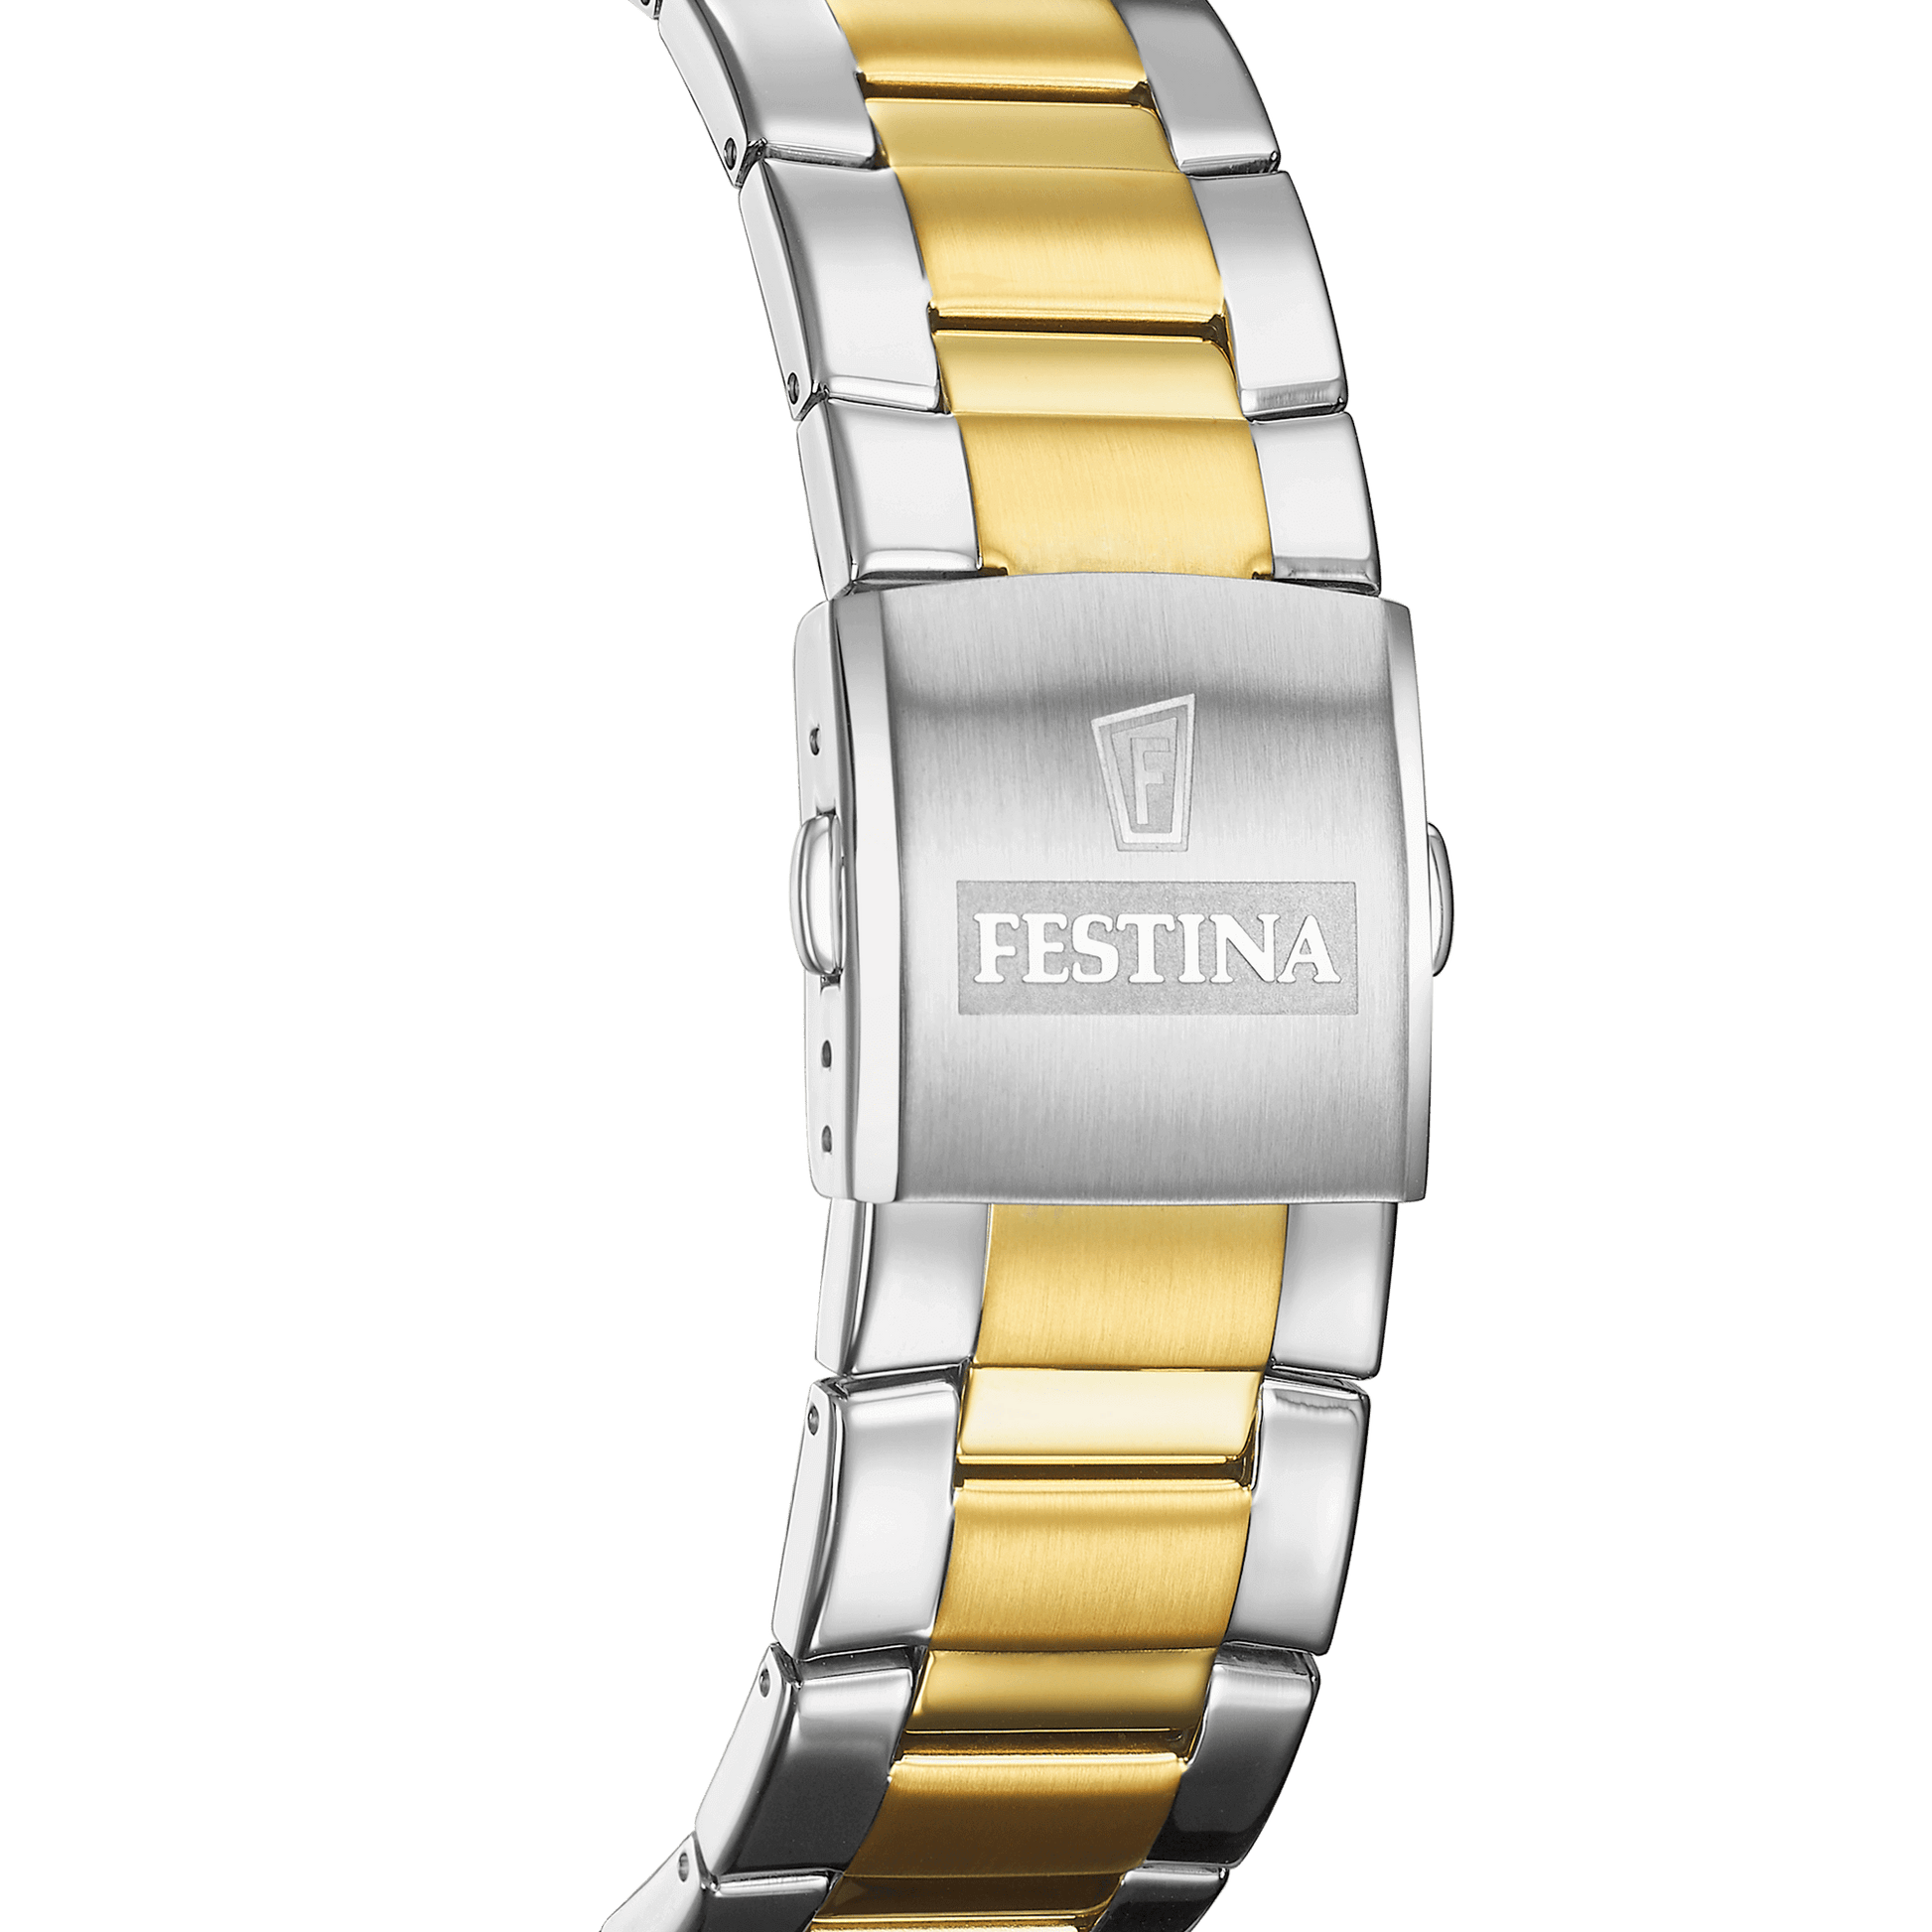 Chrono Sport F20562-3 - Chronograph | Festina Watches US